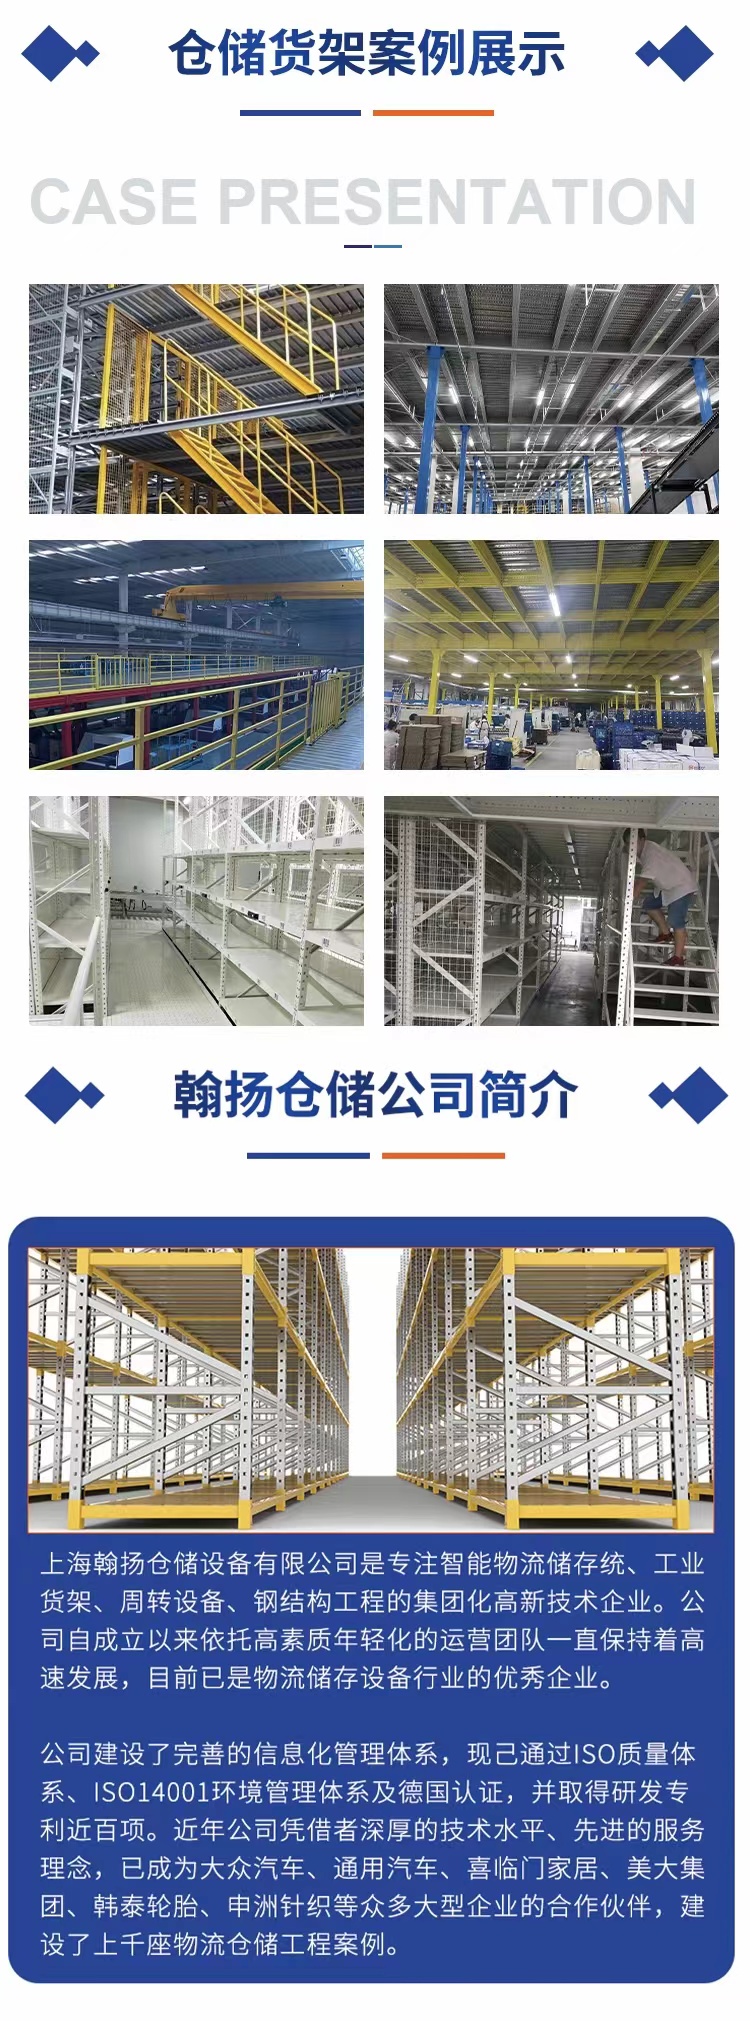 Hanyang two-story warehouse attic shelves, storage shelves, attic style shelves, heavy-duty attic platform customization